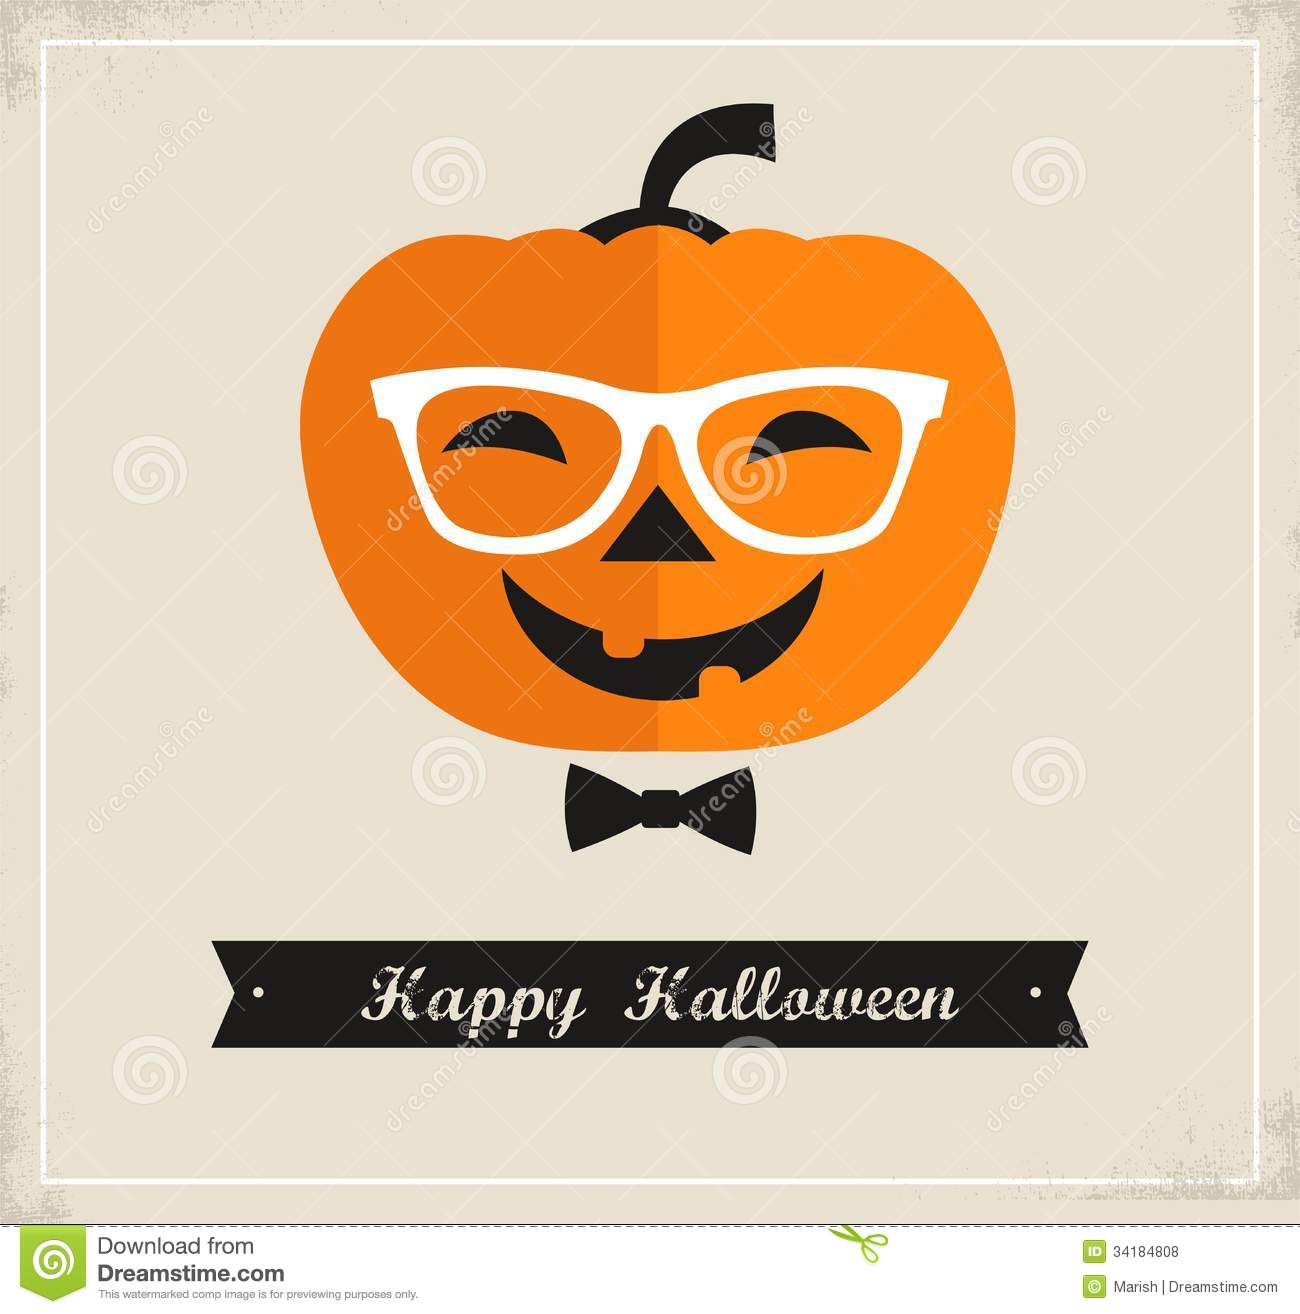 Happy Halloween Pumpkin Greeting Card